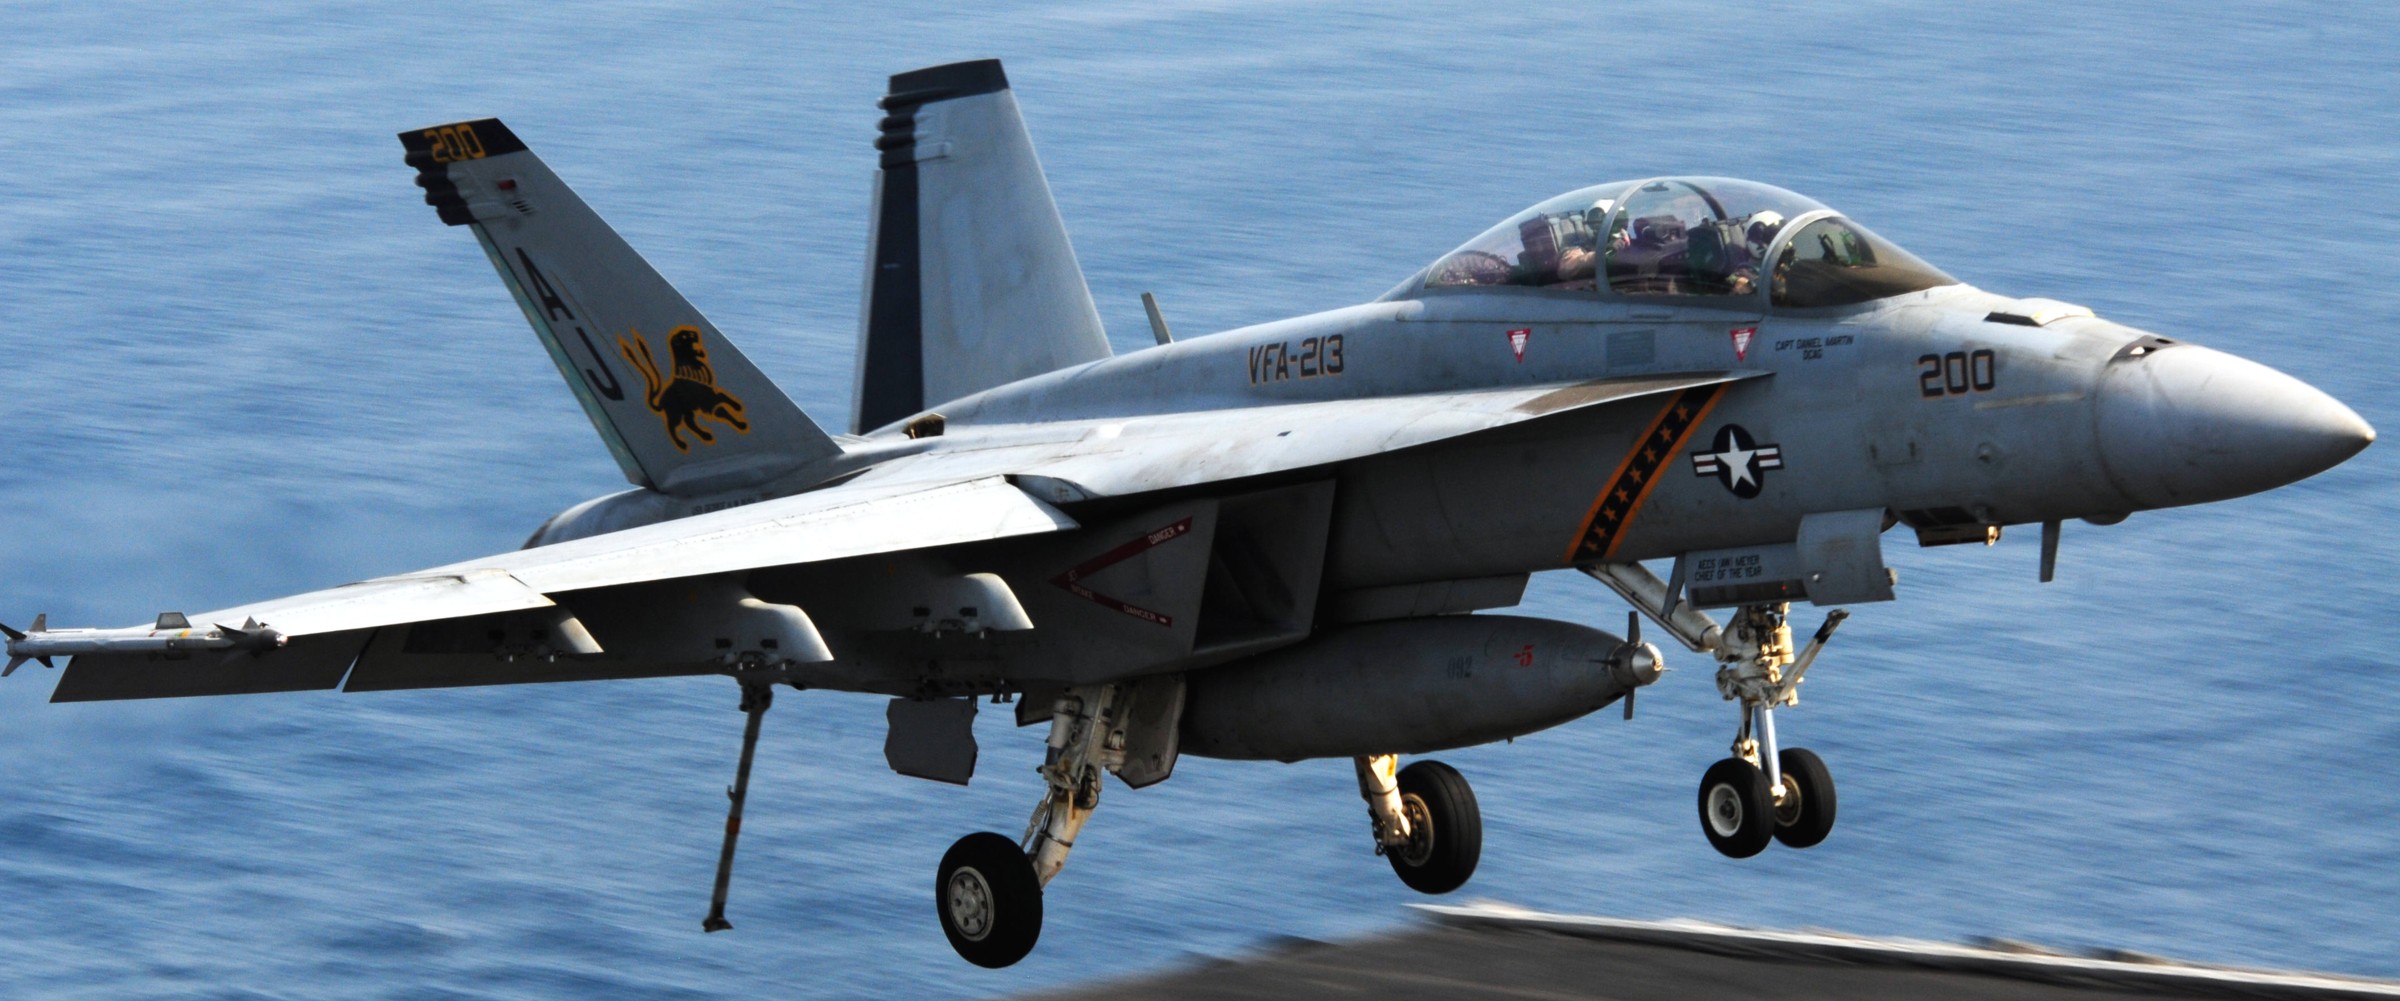 vfa-213 black lions strike fighter squadron us navy f/a-18f super hornet cvw-8 uss george h. w. bush cvn-77 69